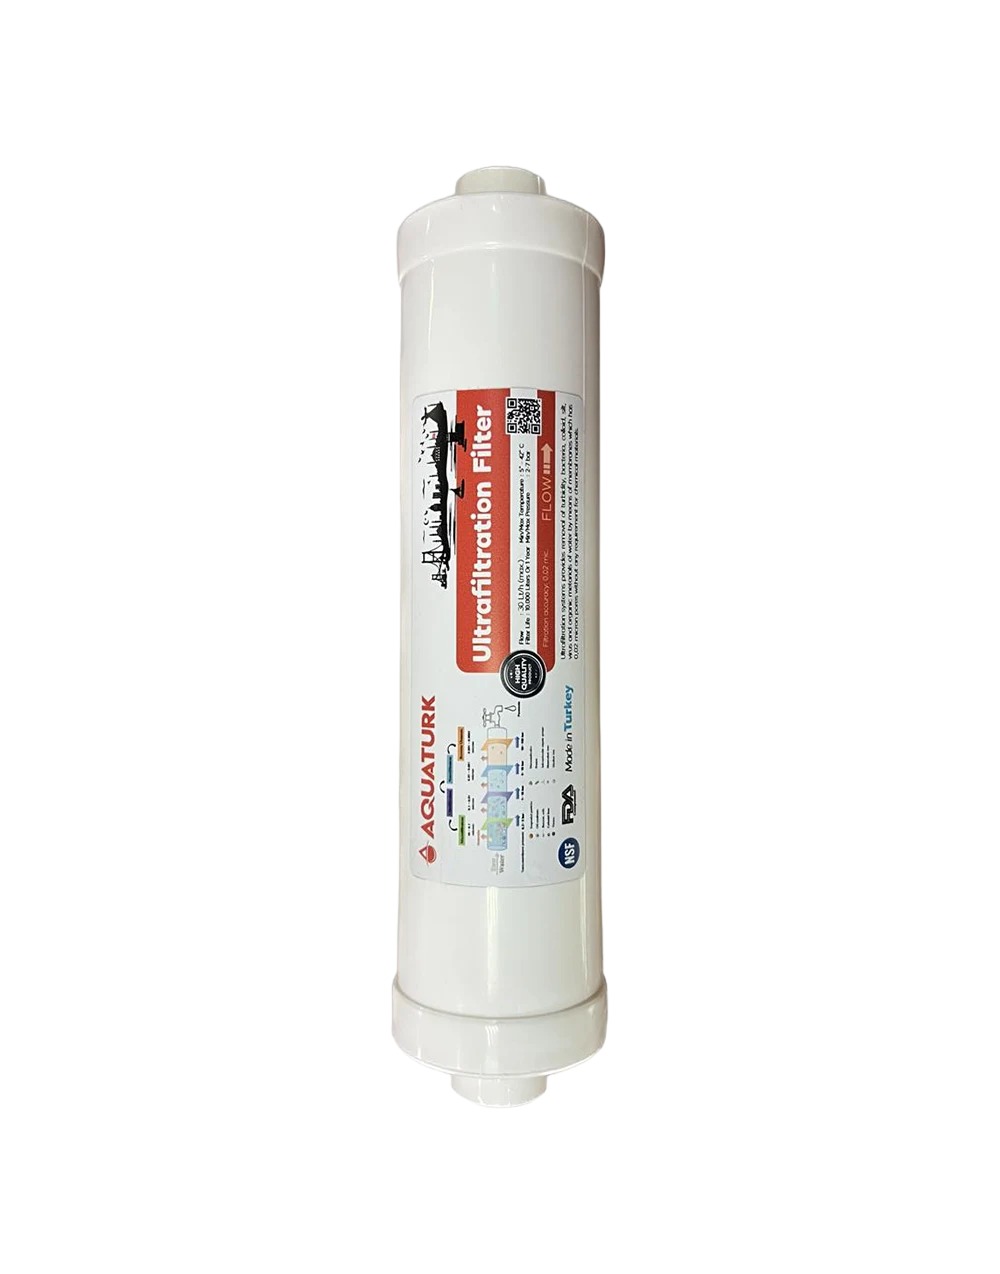 AquaTurk Ultra Filtration Antibacterial Water Filter Cartridge